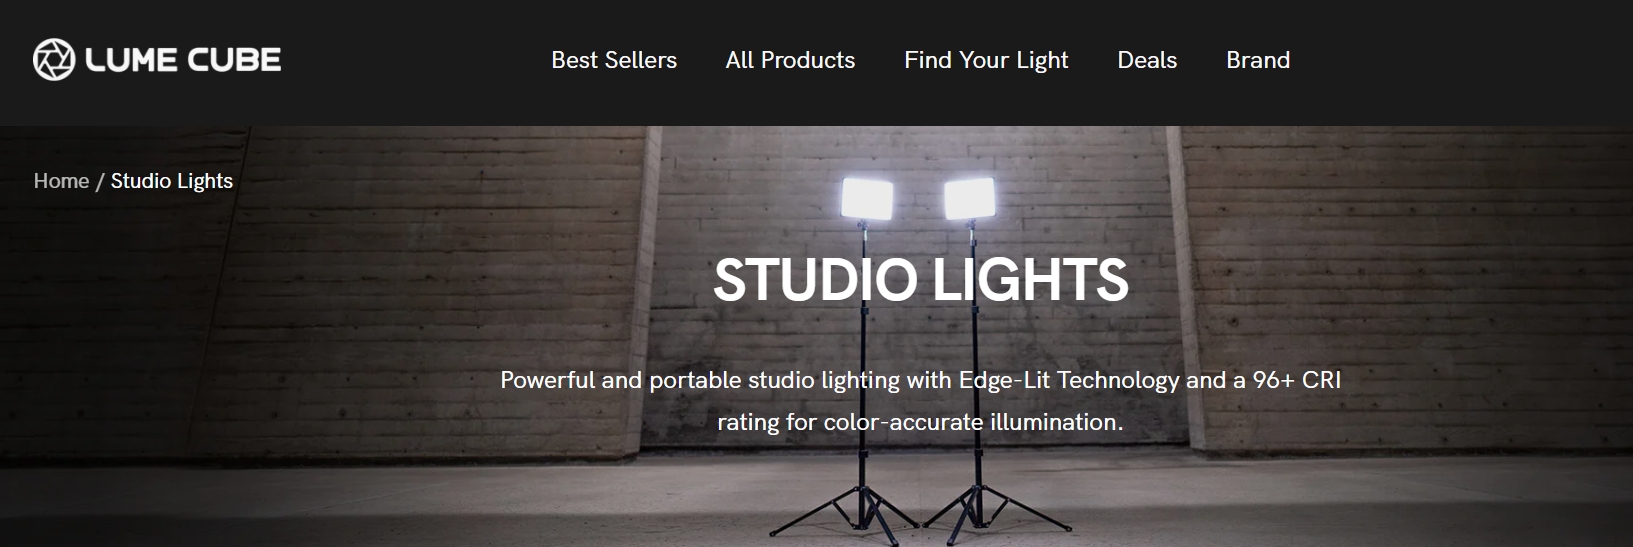 LUME CUBE LED Studio light manufacturer